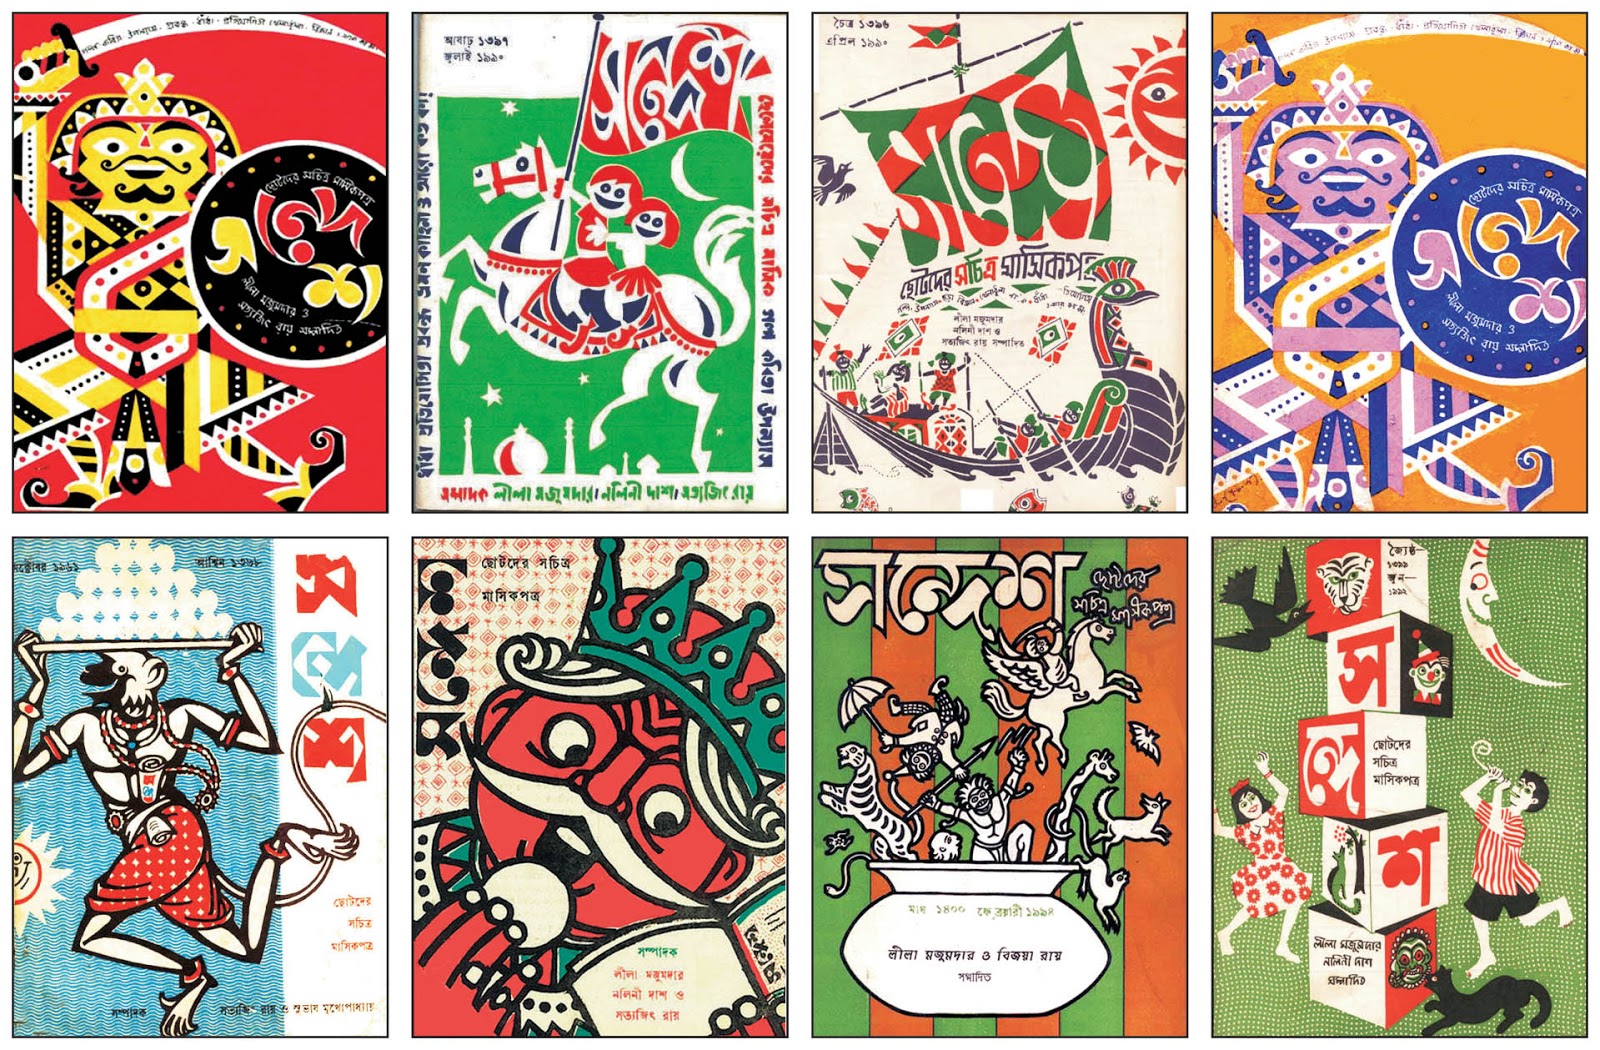 Sandesh' and Satyajit Ray : Examples of Beautifully Illustrated Covers